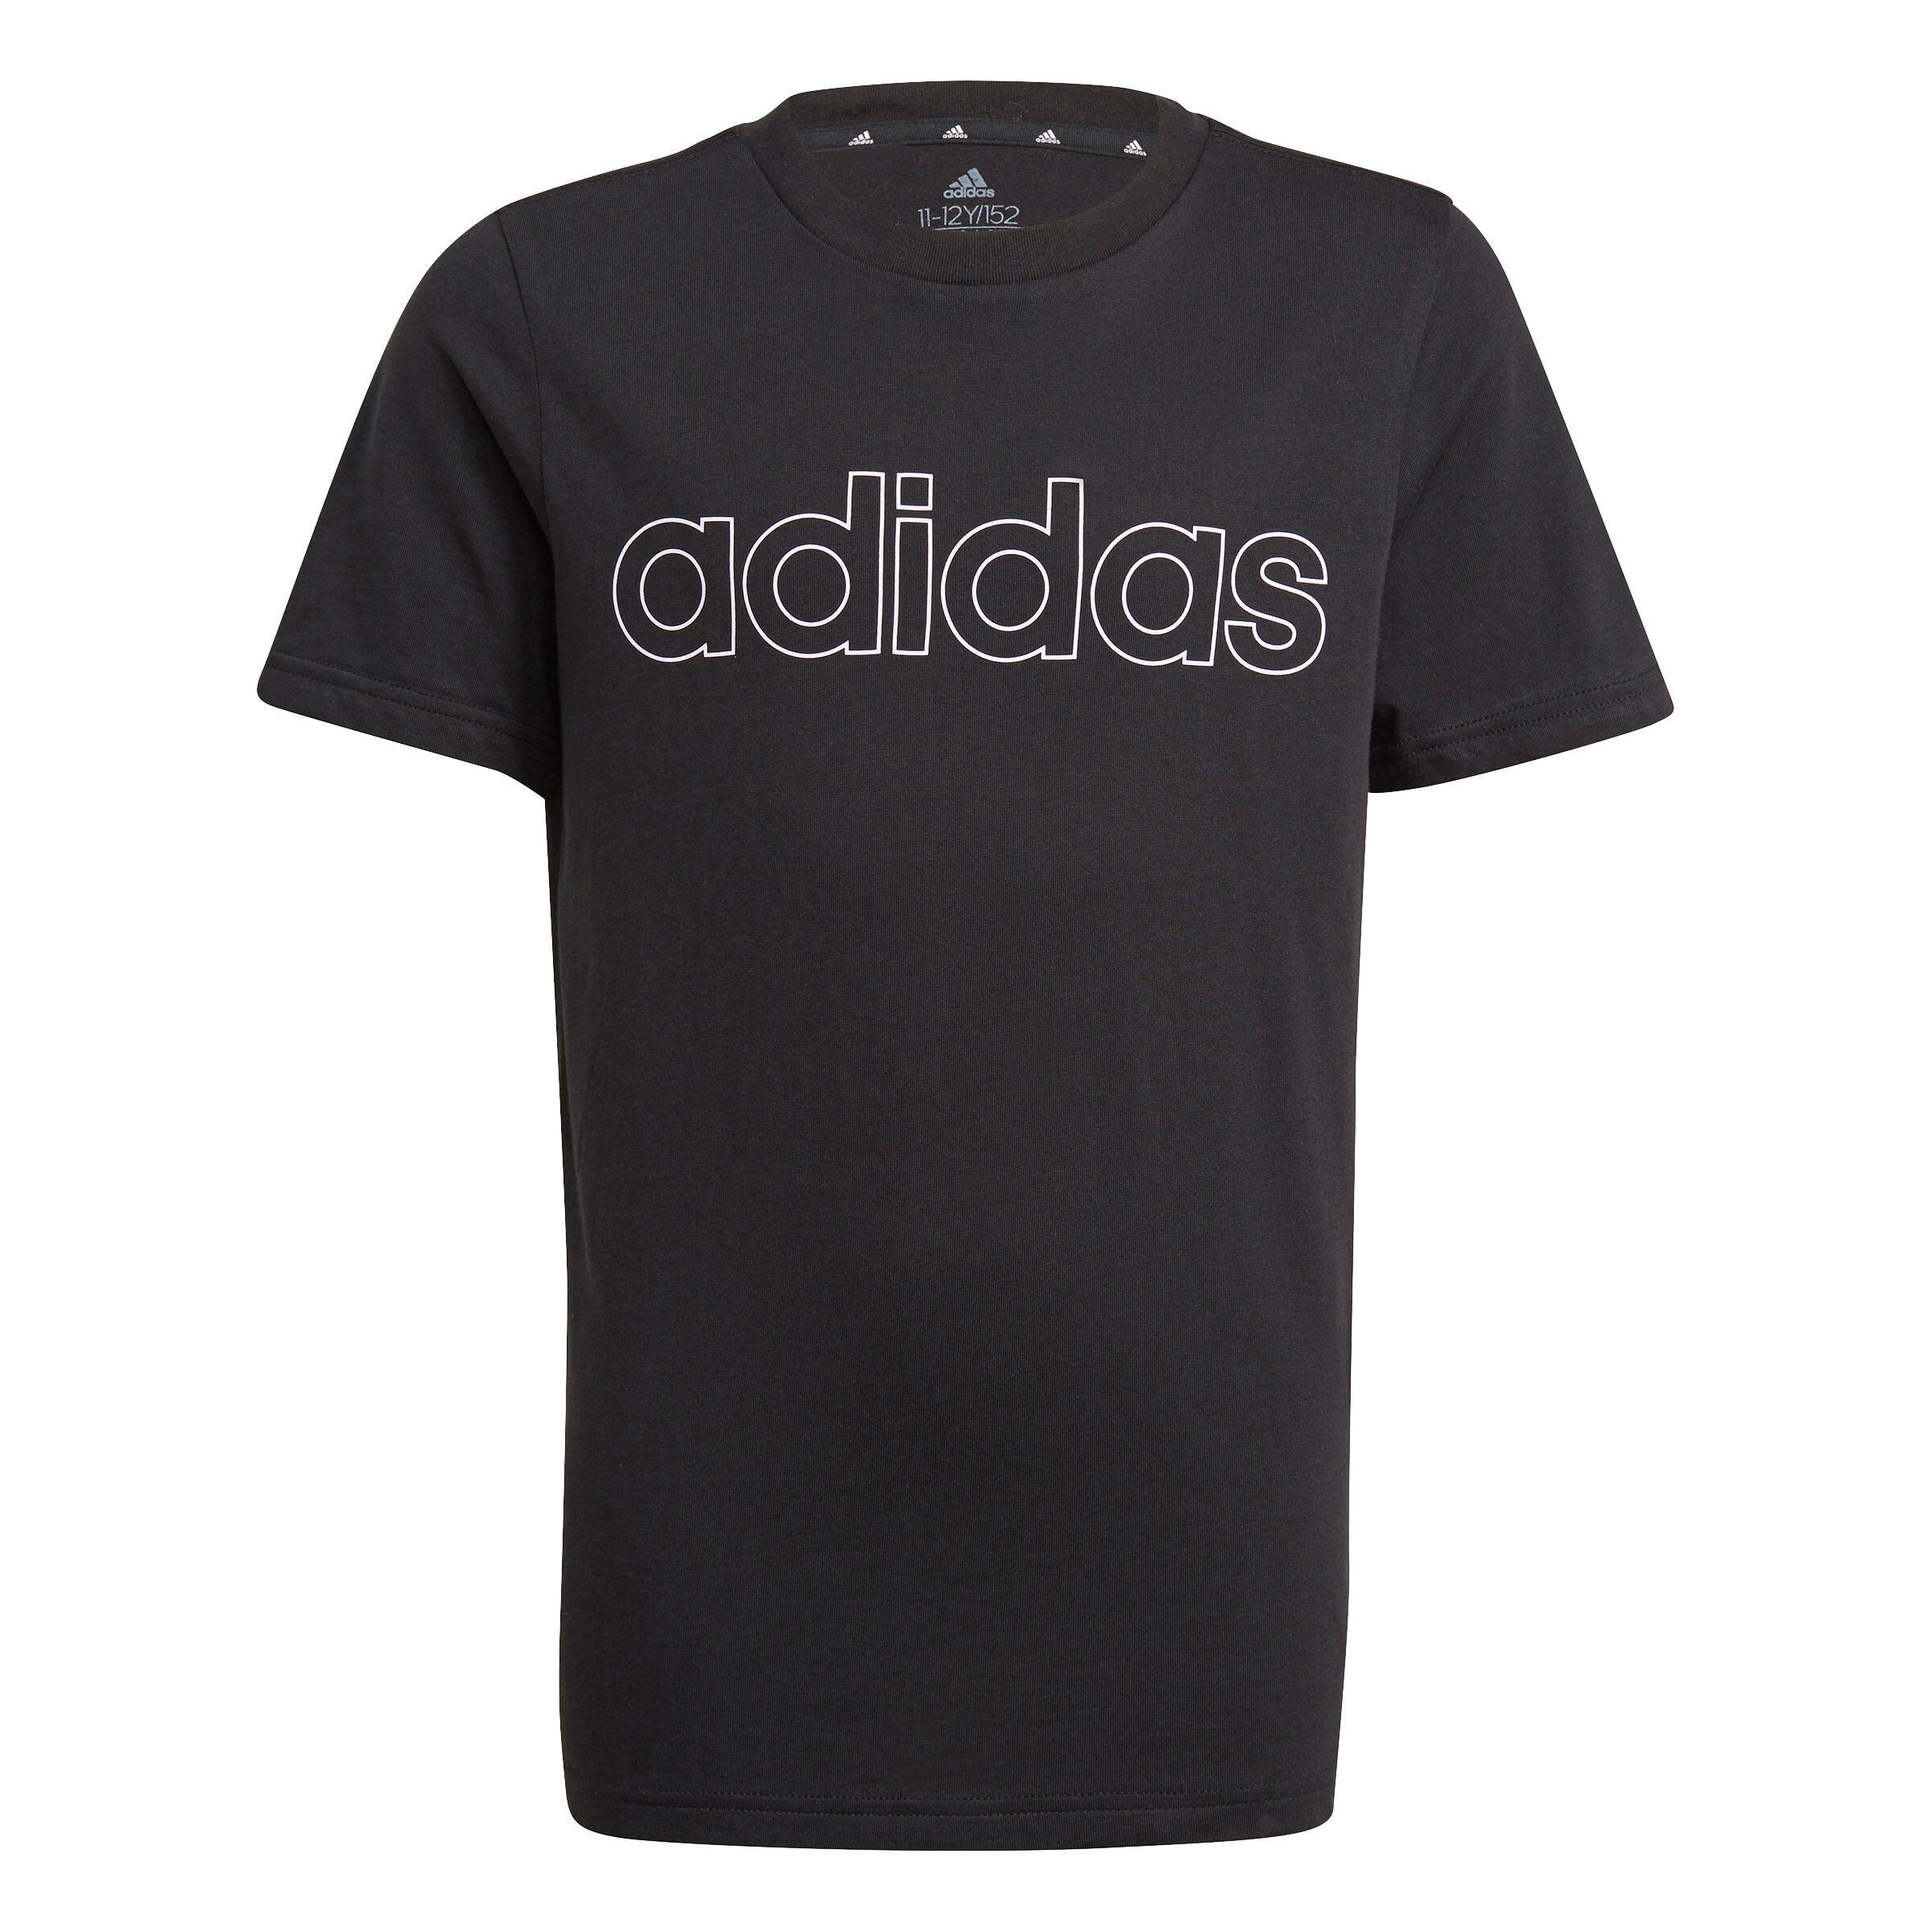 ADIDAS Refurbished Girls Breathable Adidas T-Shirt - A Grade